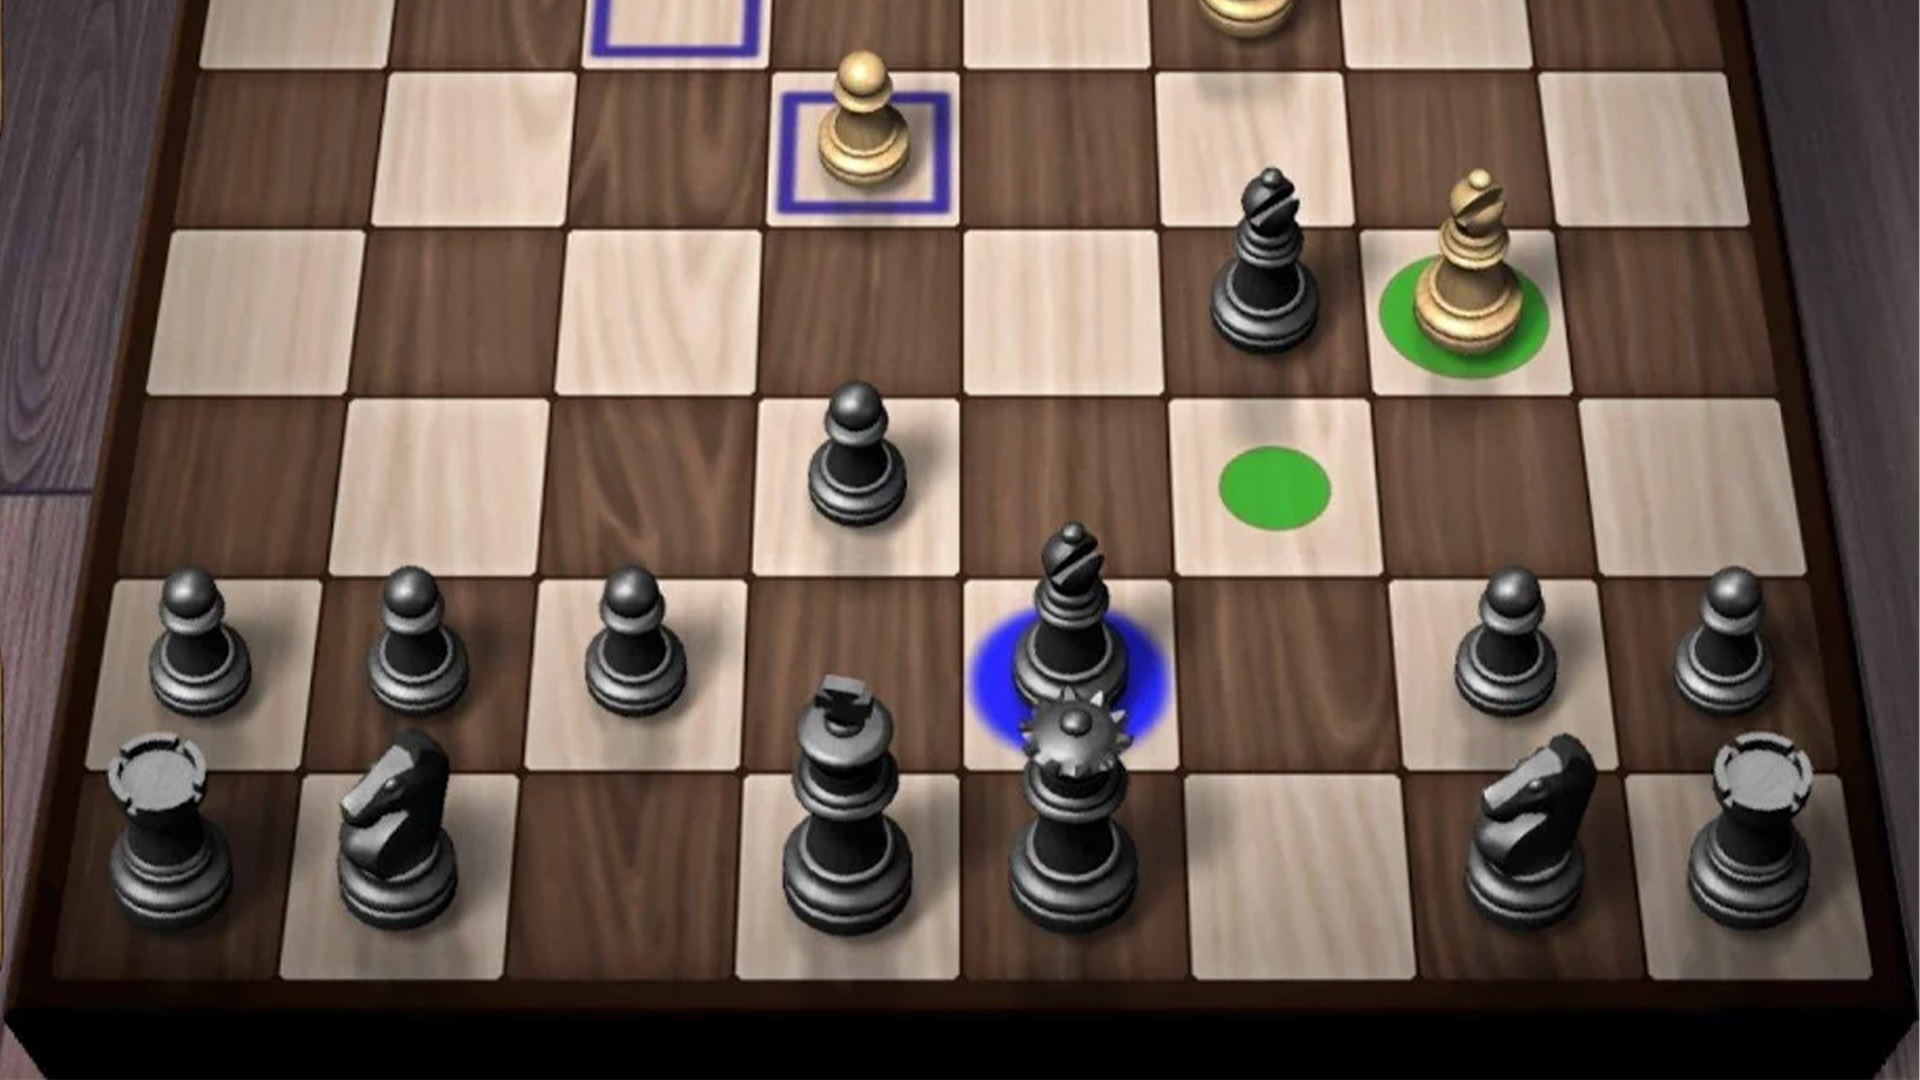 10 melhores jogos de xadrez para Android - RafaS GeeK